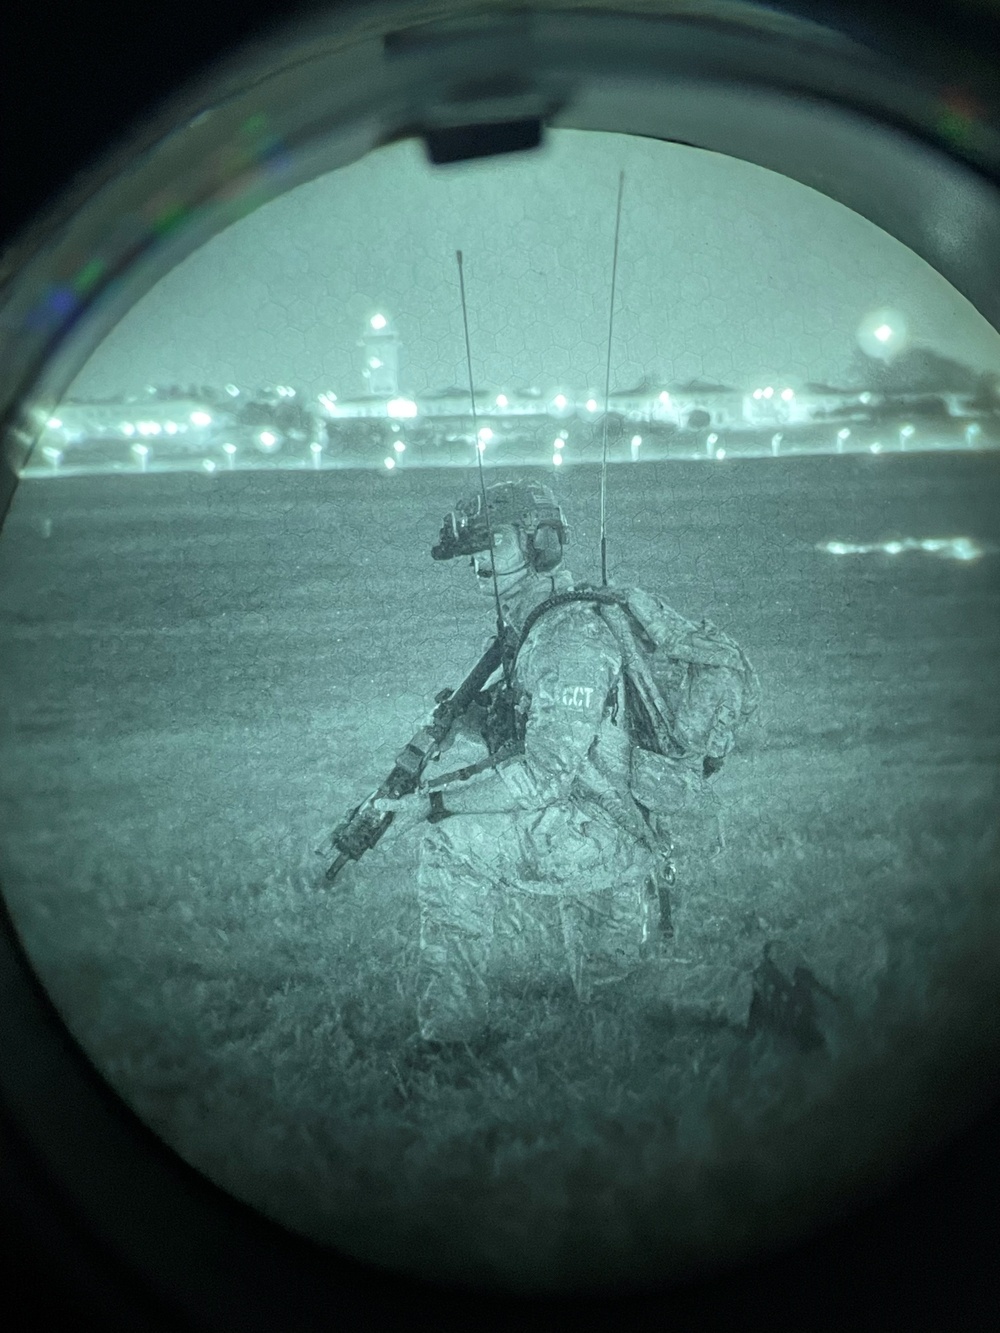 DVIDS - Images - U.S. combat controller surveys landing zone in South ...